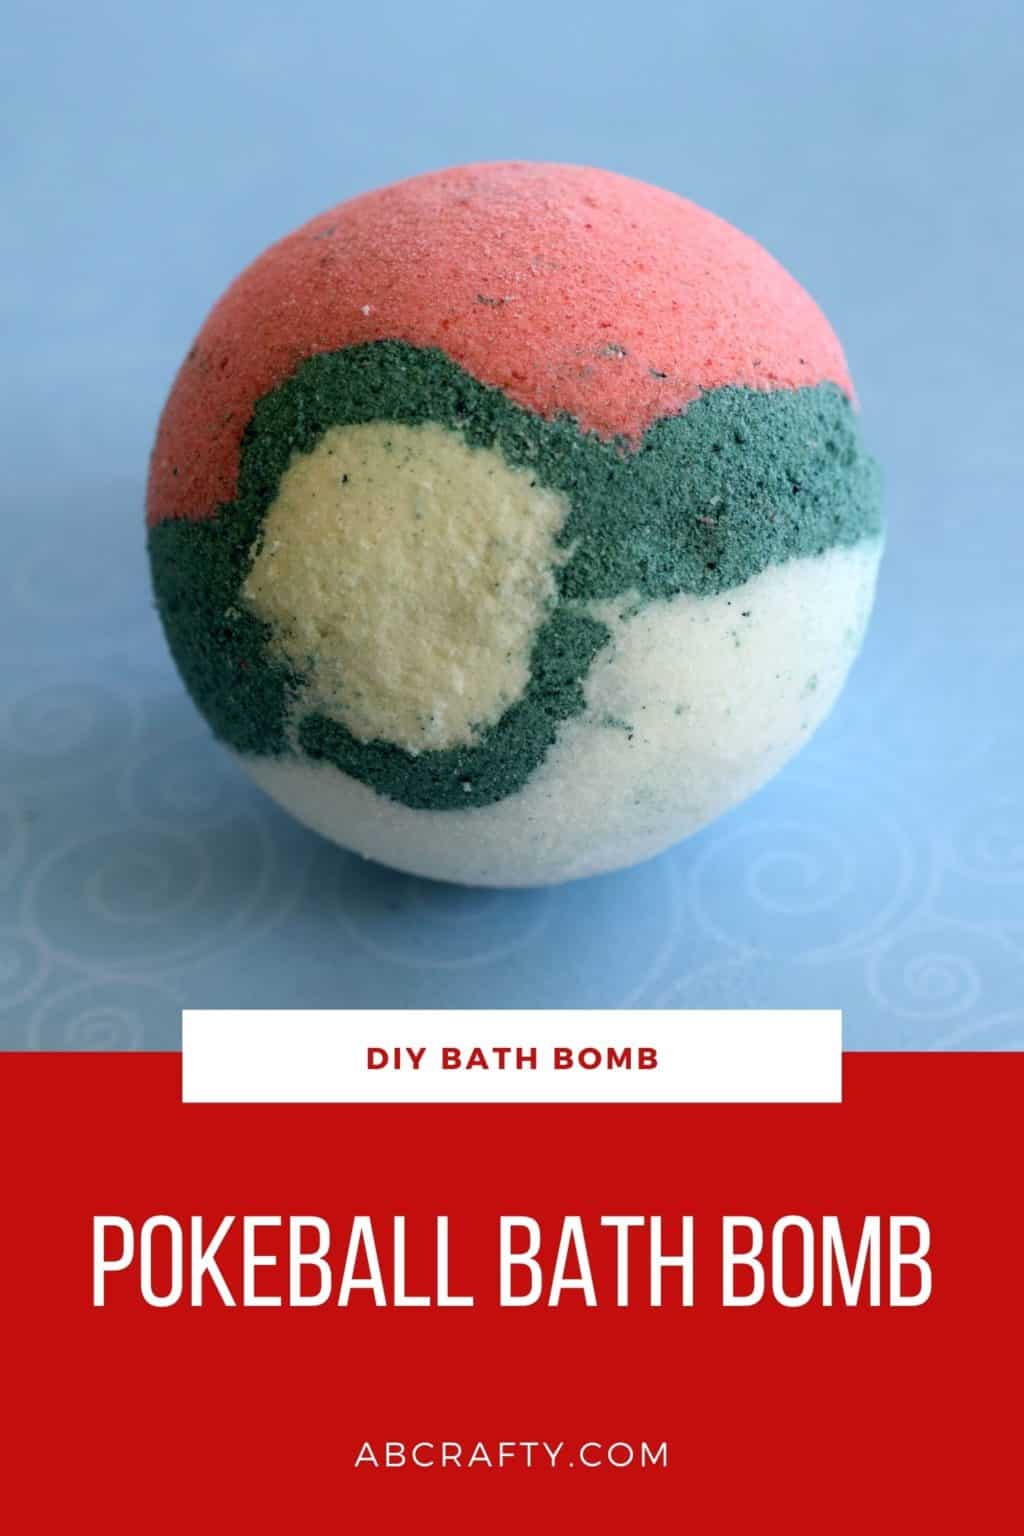 diy pokemon bath bomb in the shape of a pokeball with the title "diy bath bomb, pokeball bath bomb"